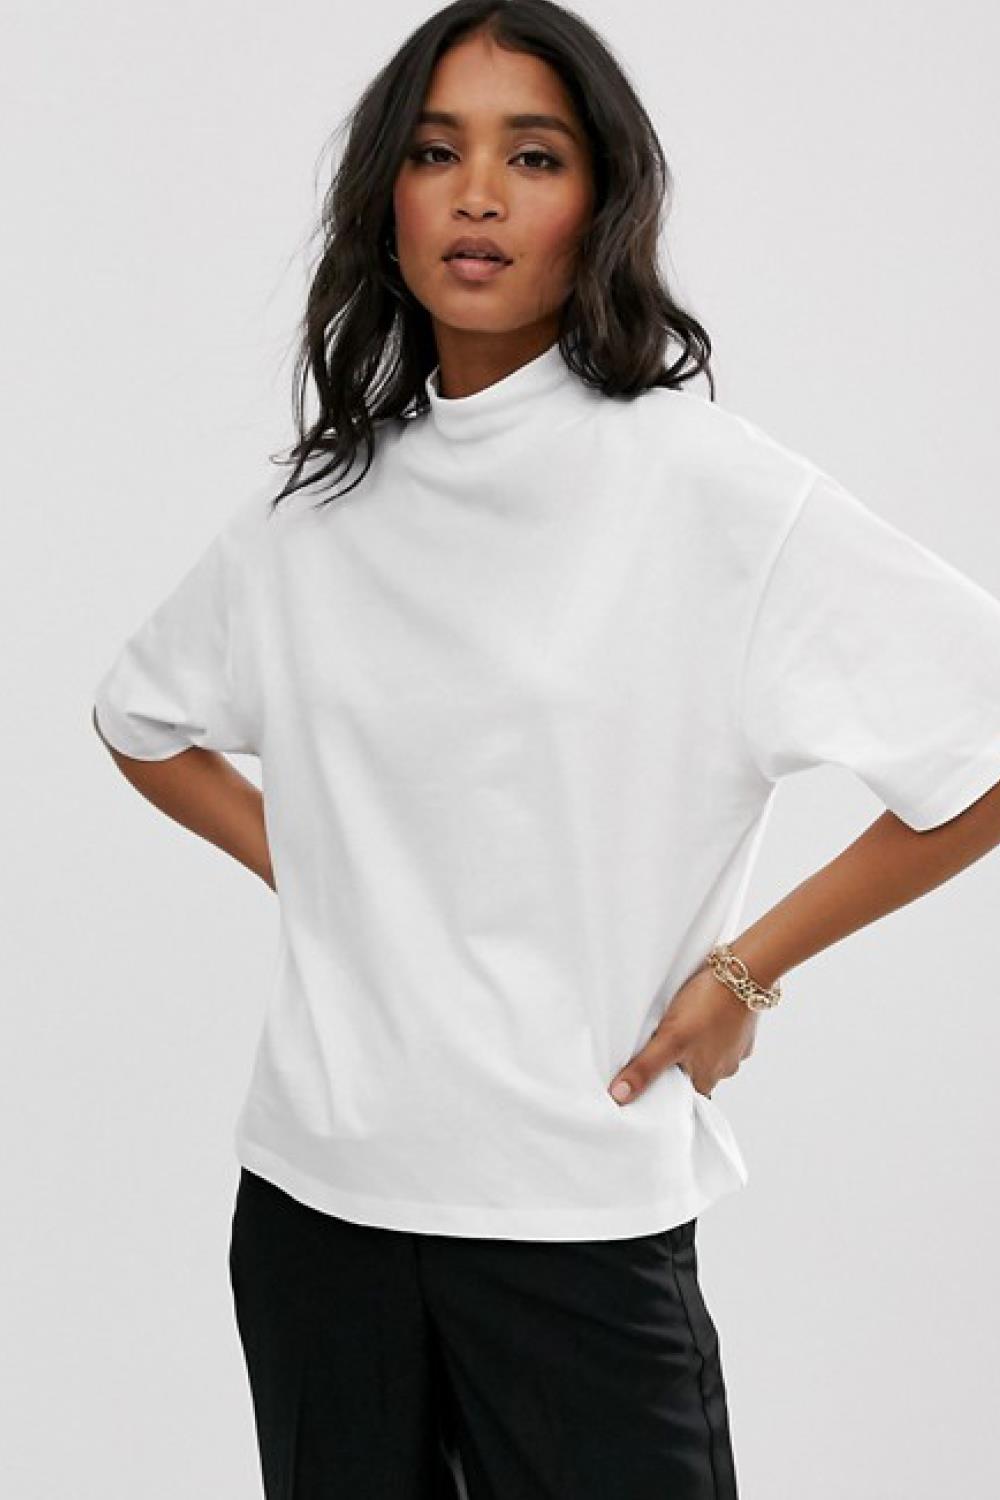 camiseta blanca asos 15,99€